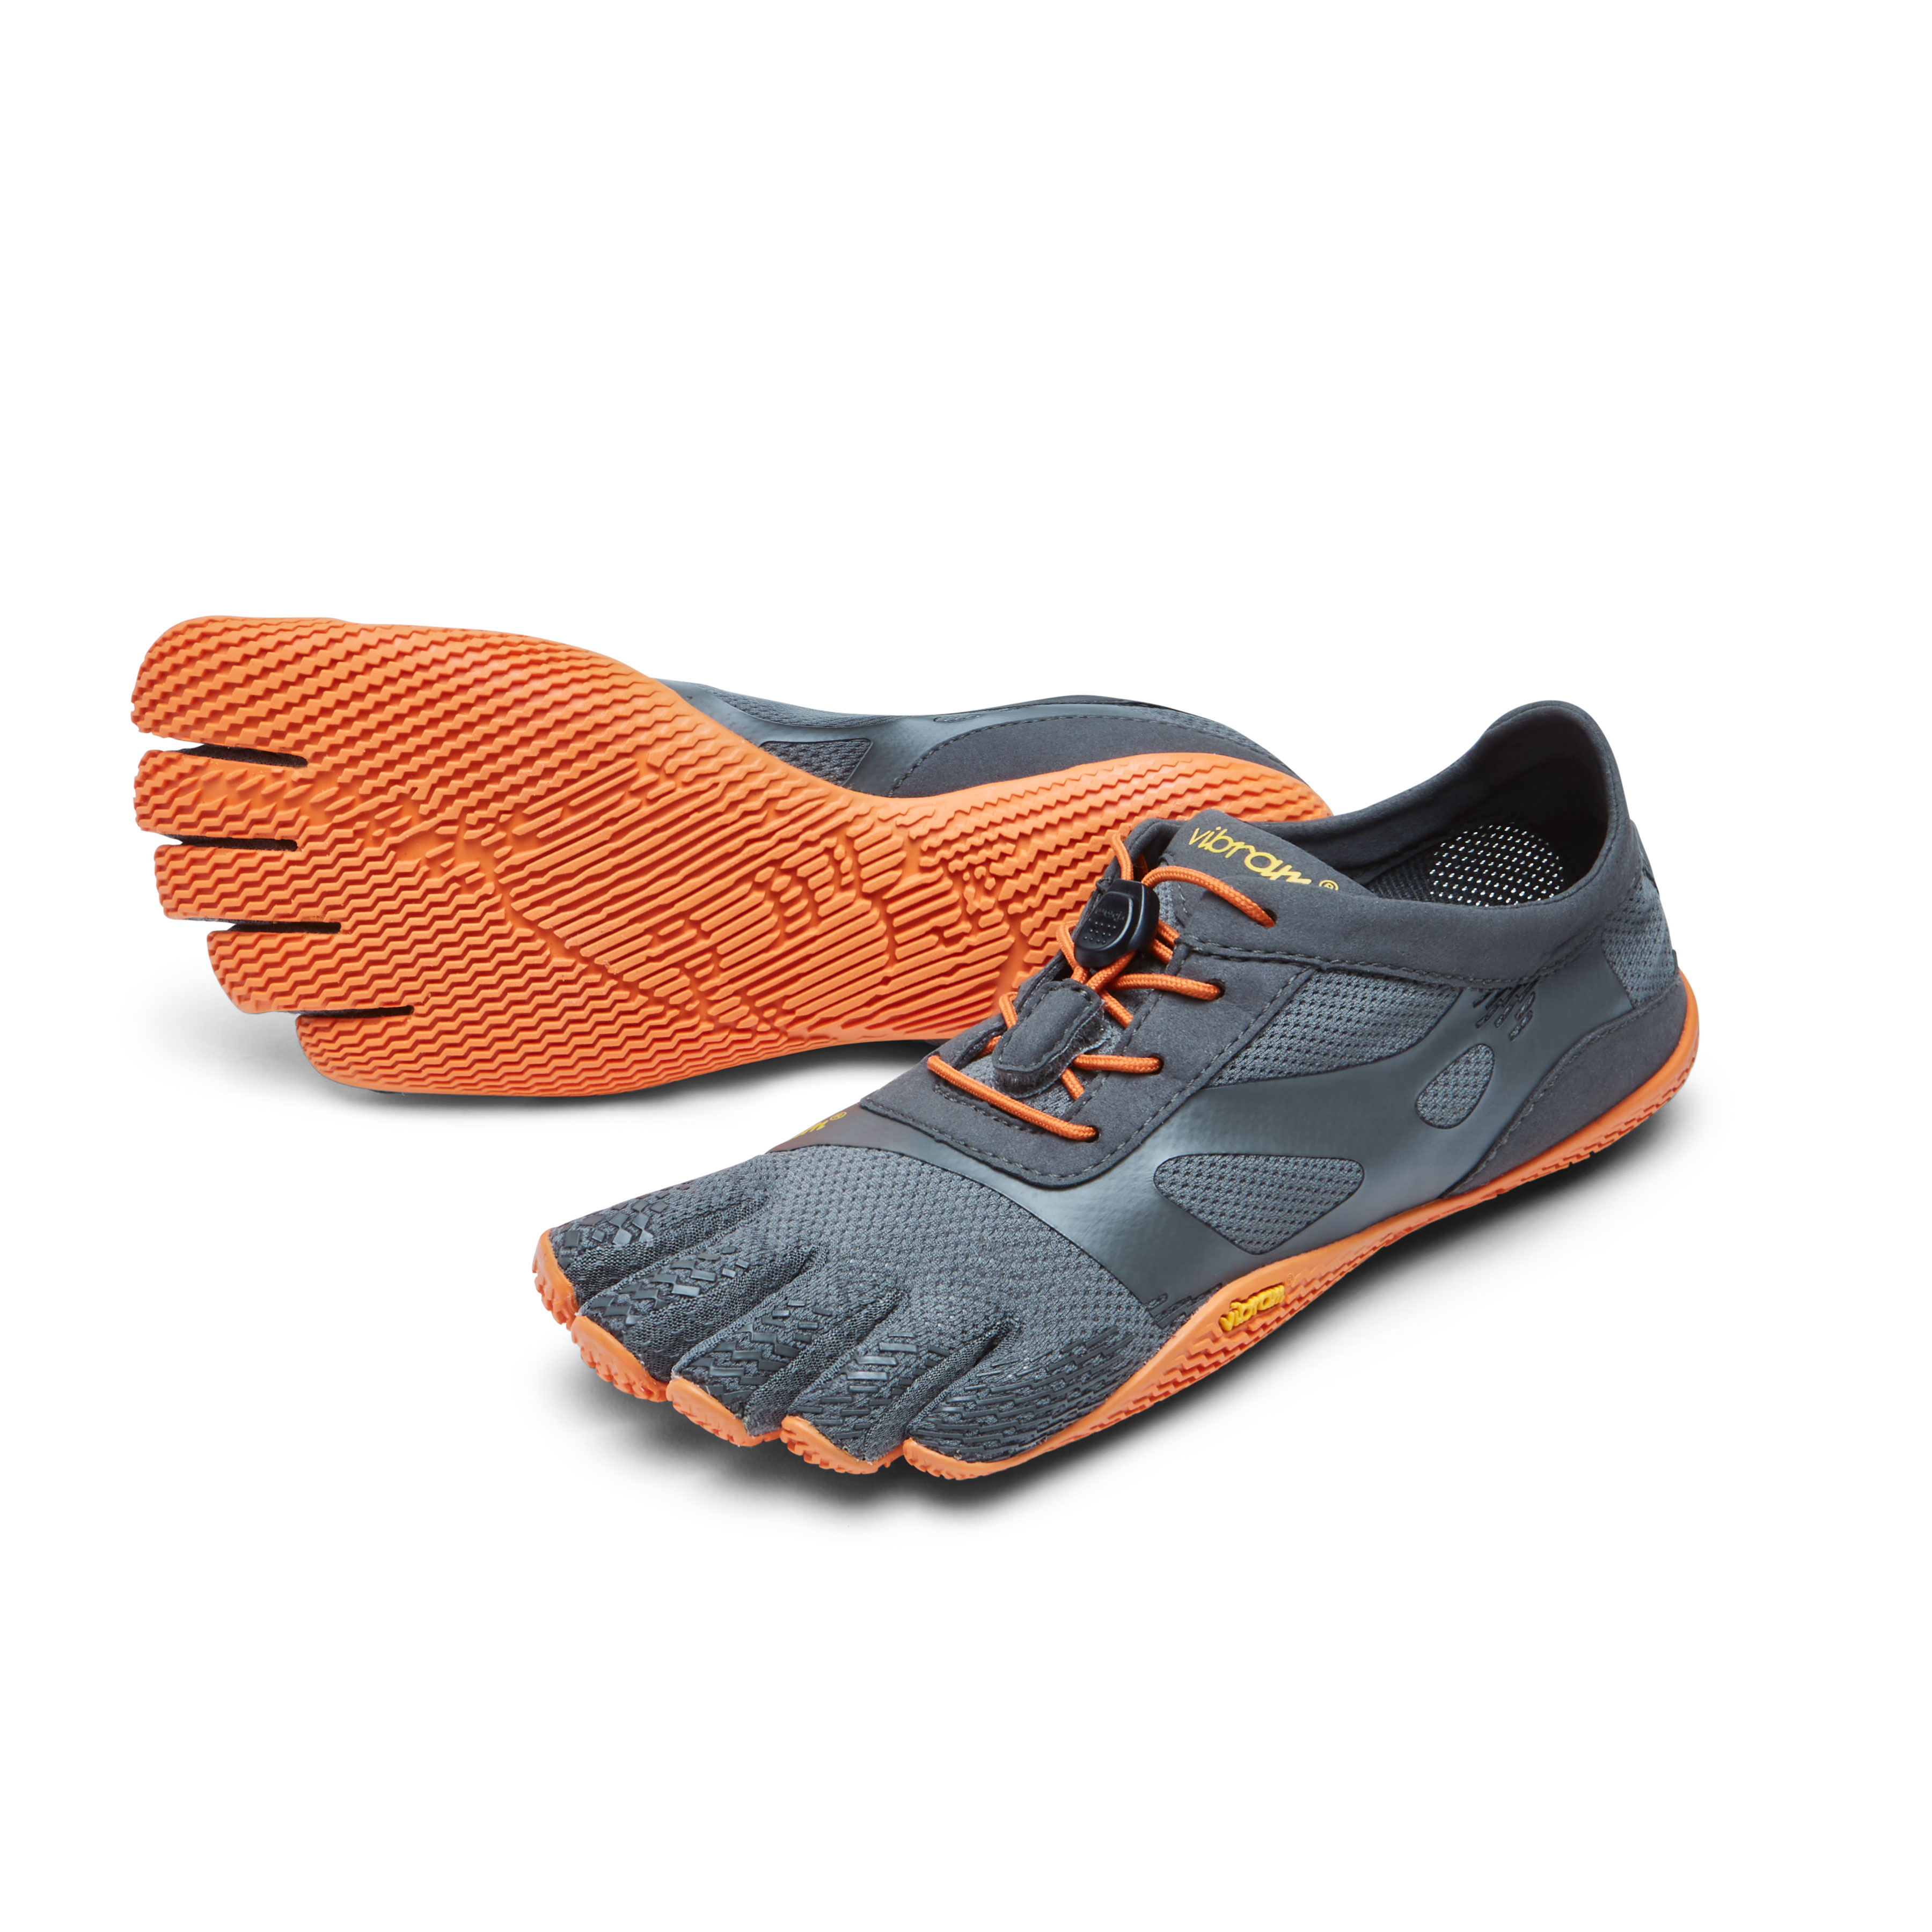 MAX FEEL Barefoot Feel KS Evo 5 Fingers Details about   Vibram Ladies Running Training Shoes 